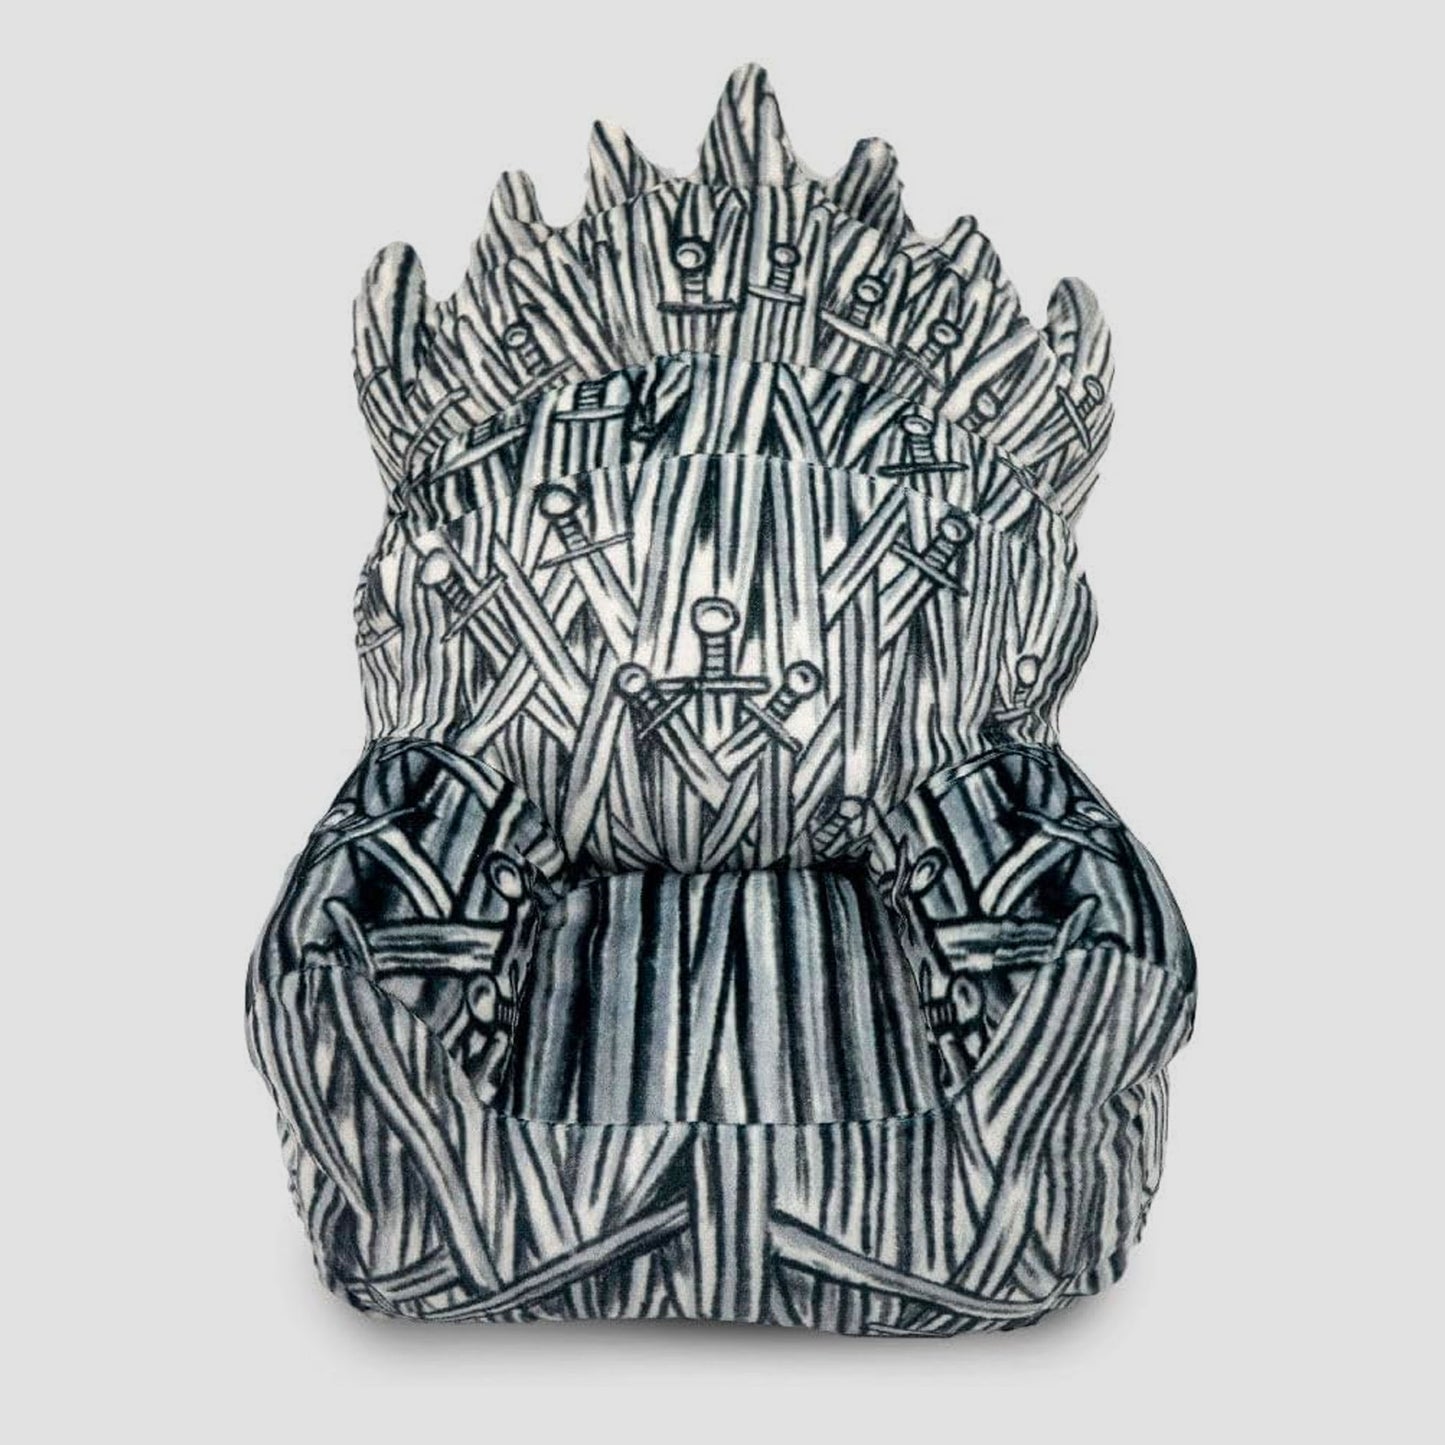 Iron Throne (Game of Thrones) Dog Plush Squeaker Toy